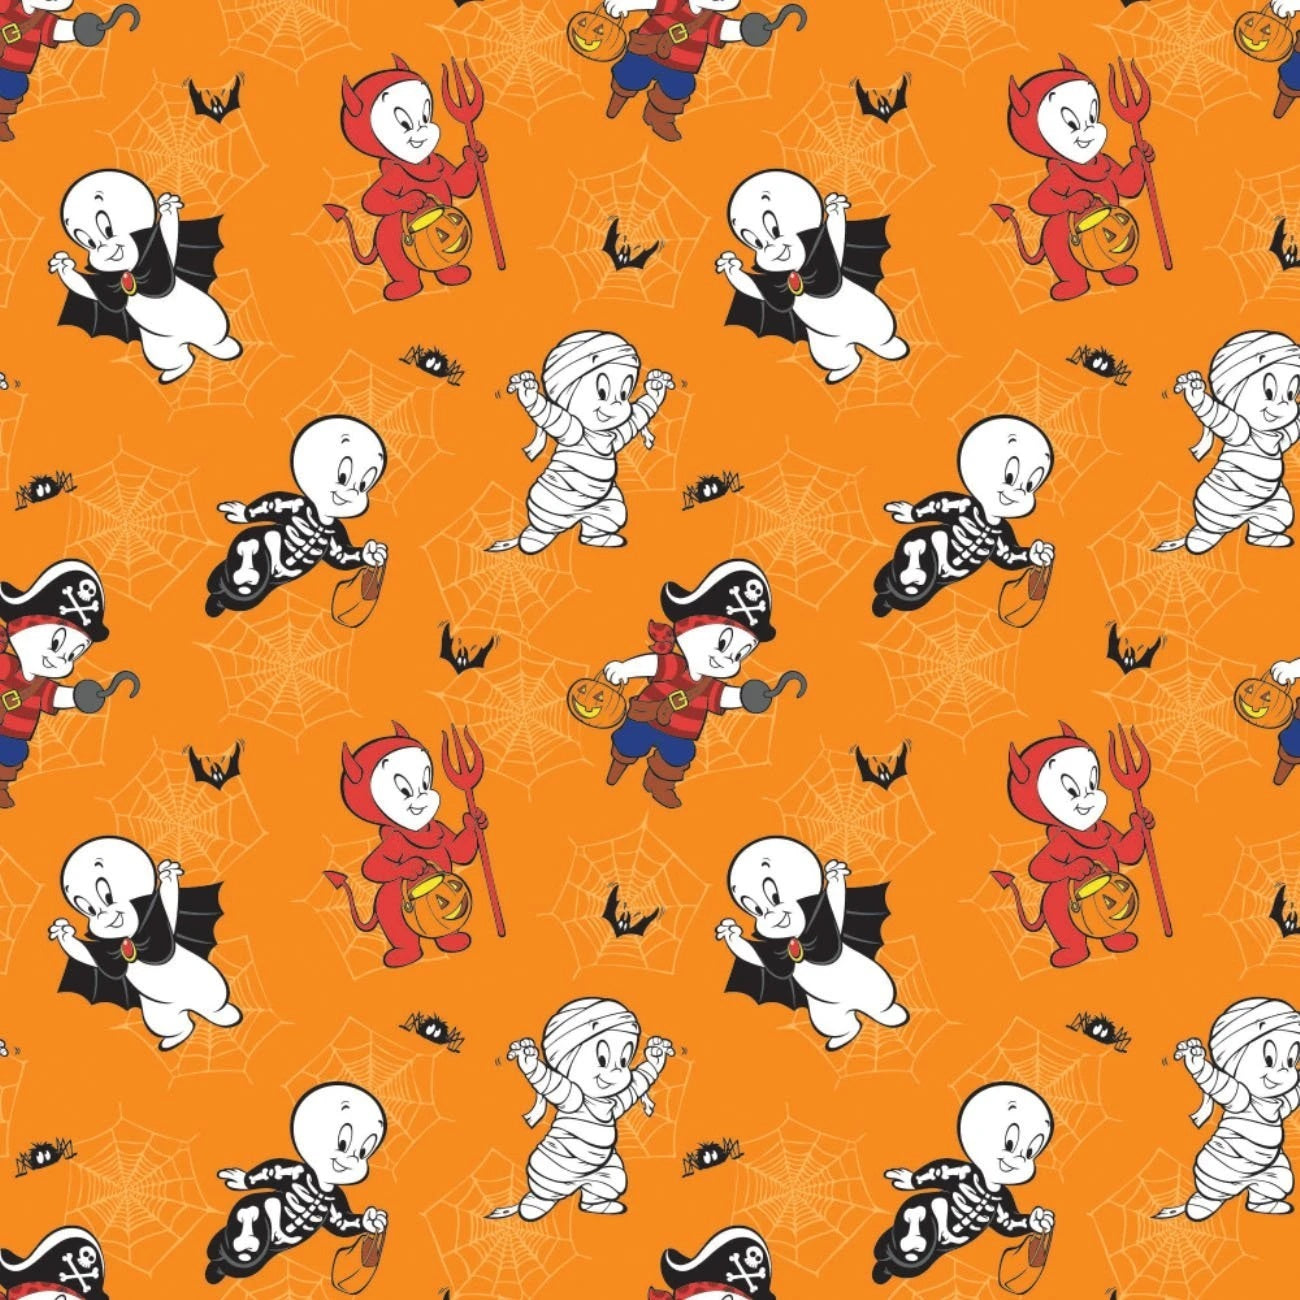 Casper Costume Fun - Character Halloween Cotton Print Fabric - End of Bolt 130cm